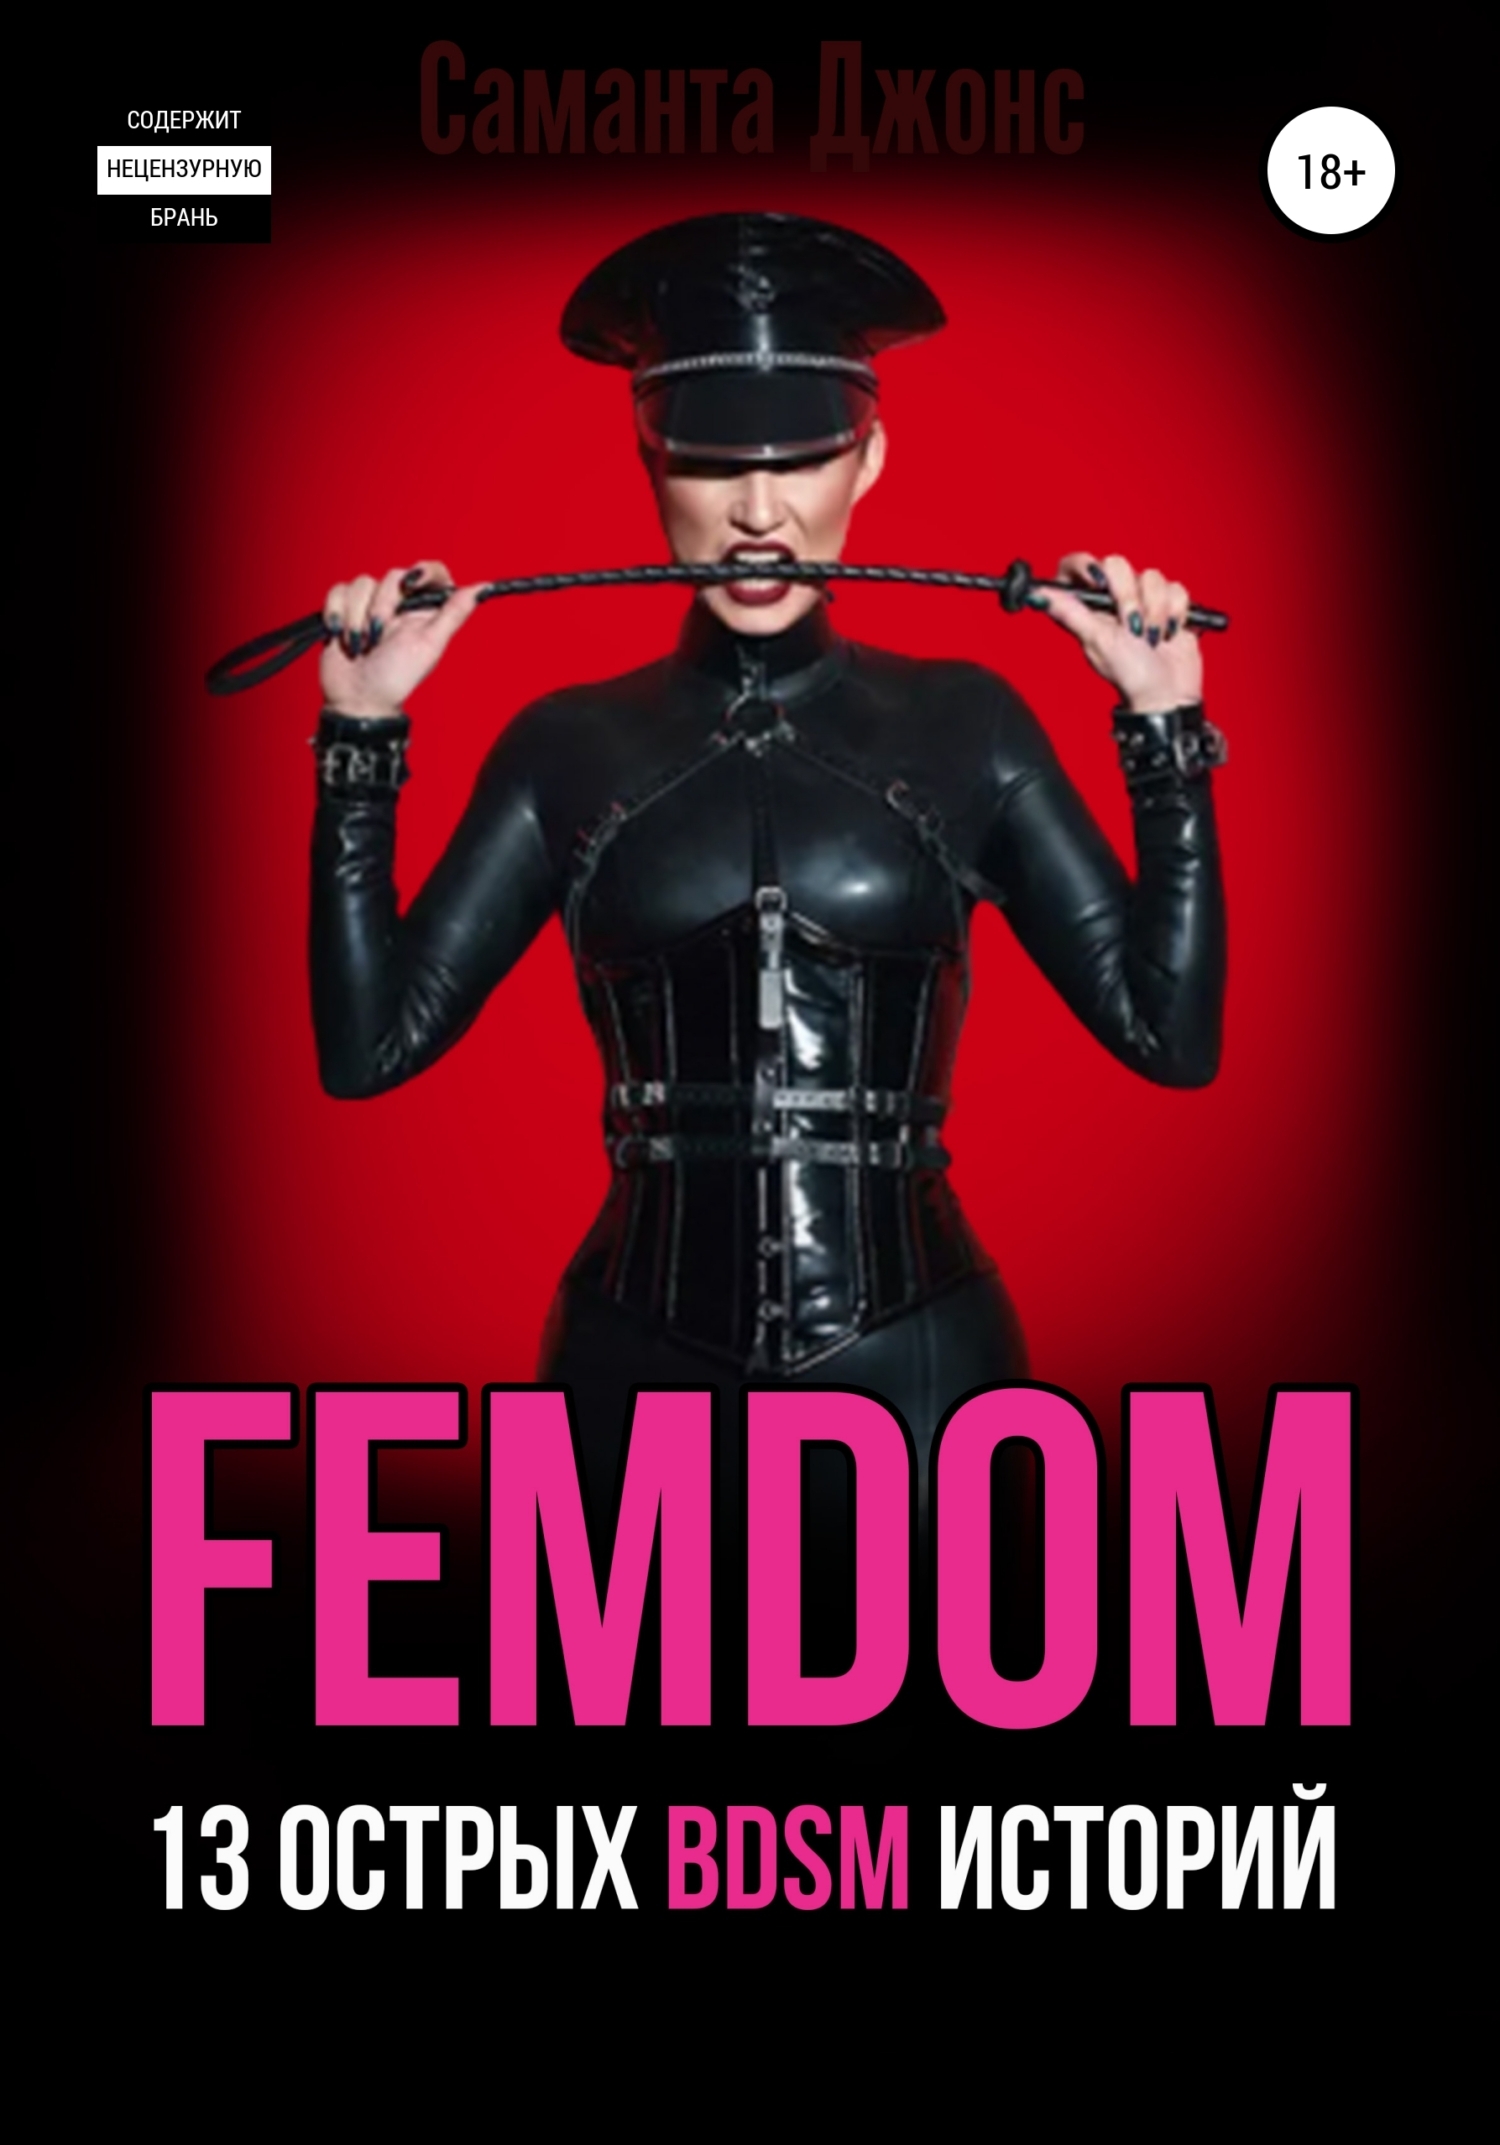 FEMDOM. 13 острых BDSM историй, Саманта Джонс – скачать книгу fb2, epub, pdf на ЛитРес